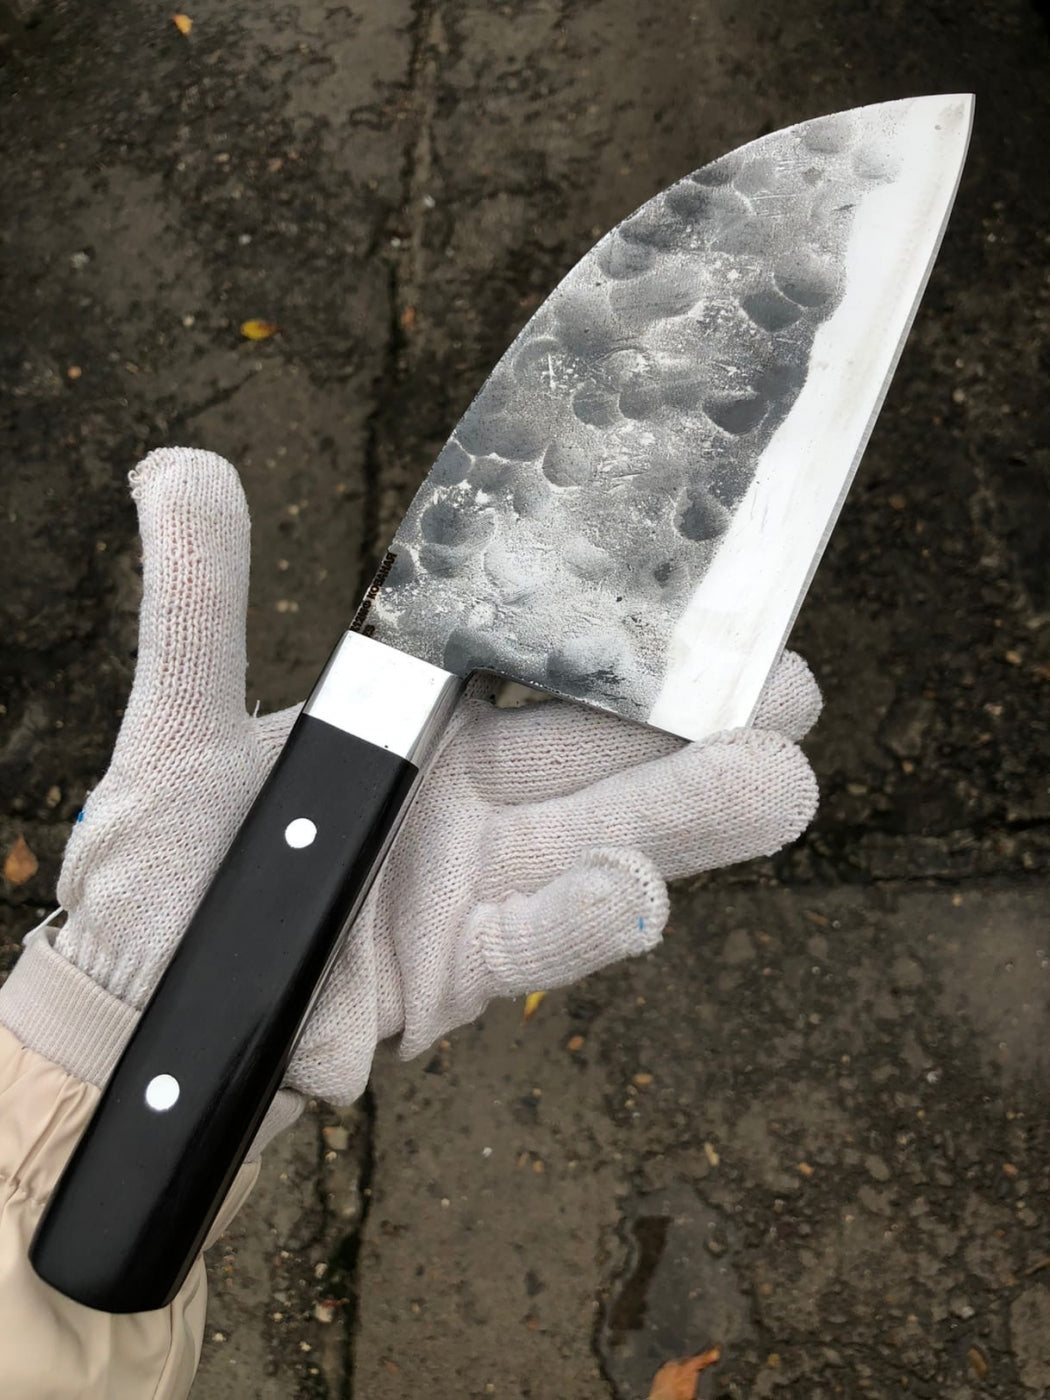 Serbian knife